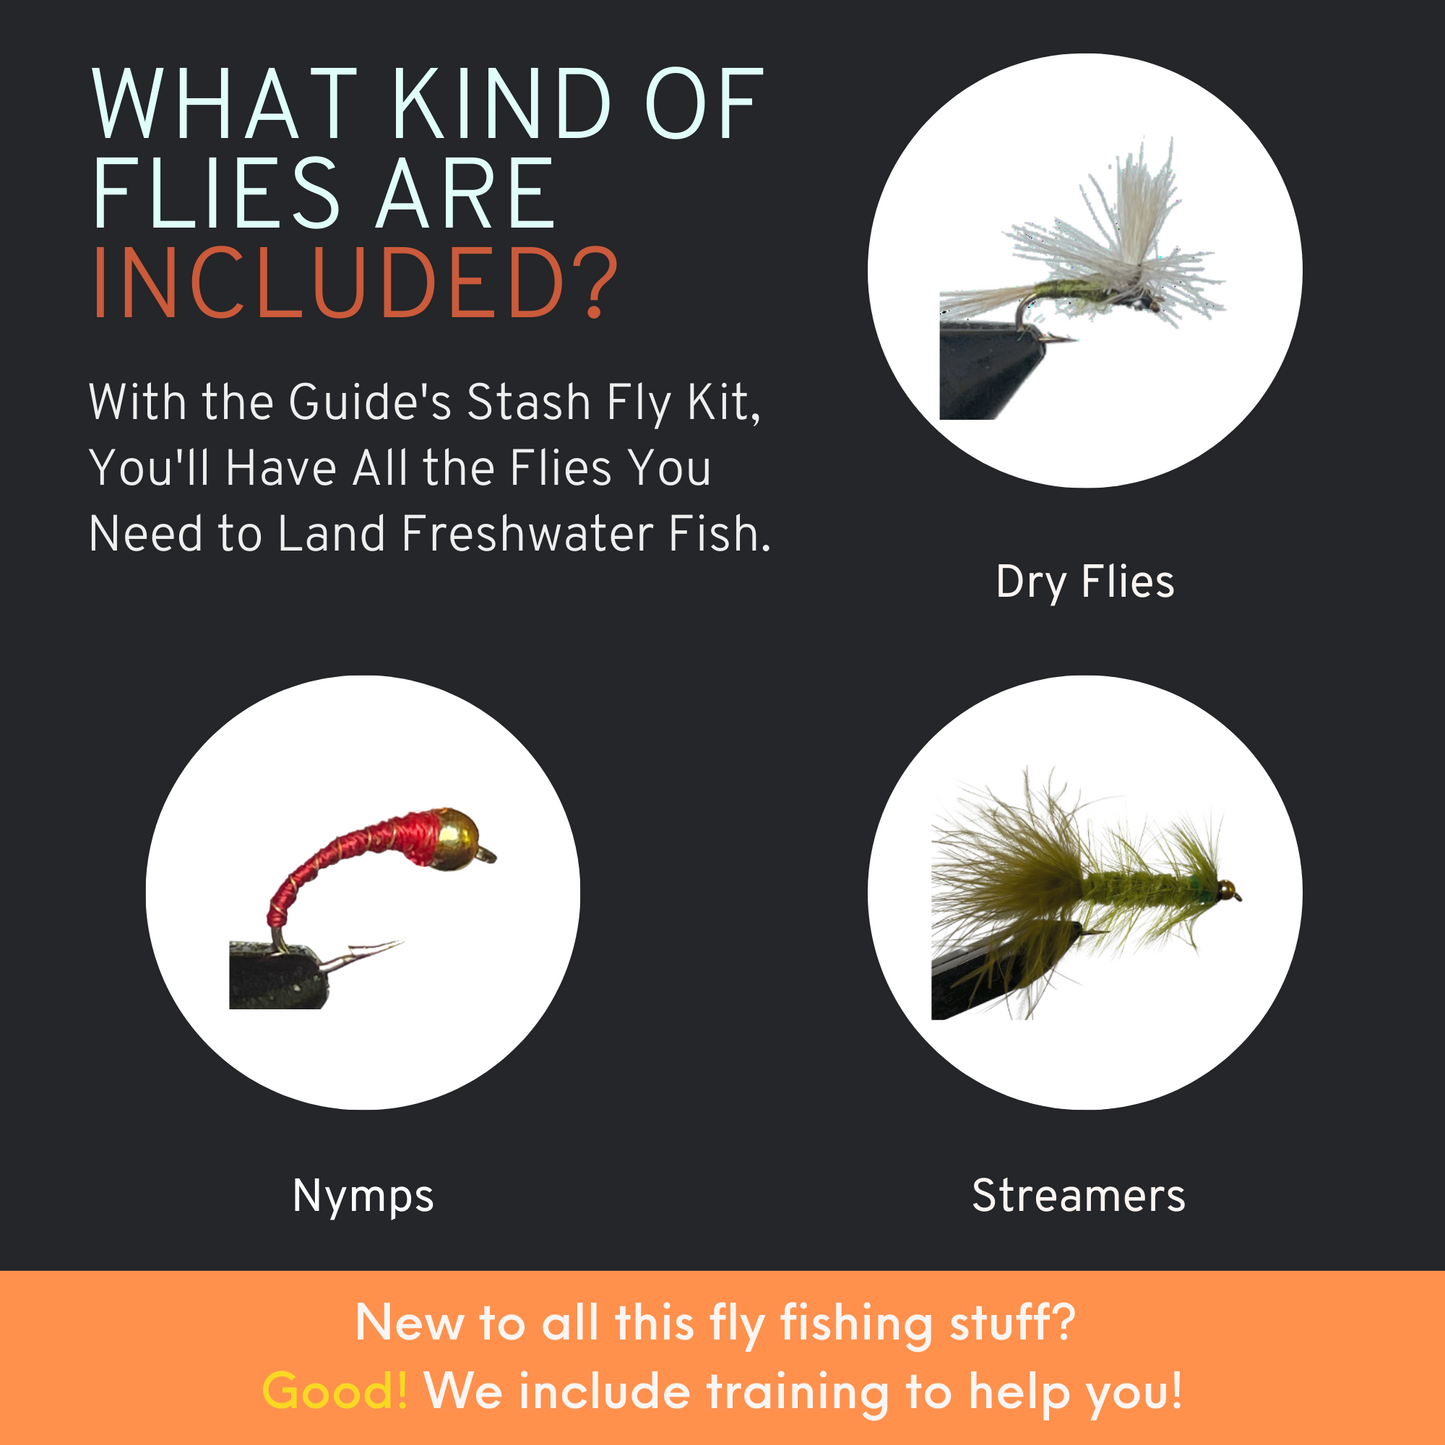 Guide's Stash Fly Kit